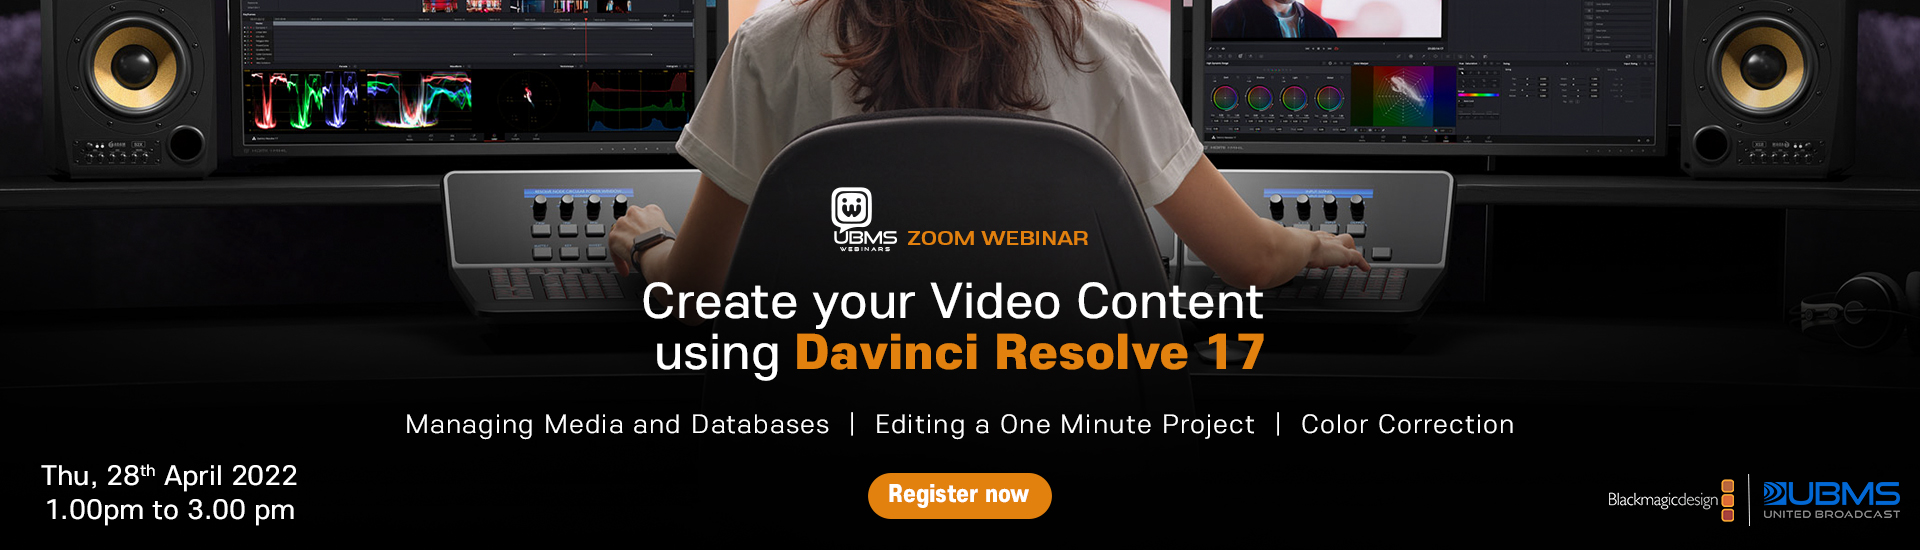 Create your Video Content using Davinci Resolve 17